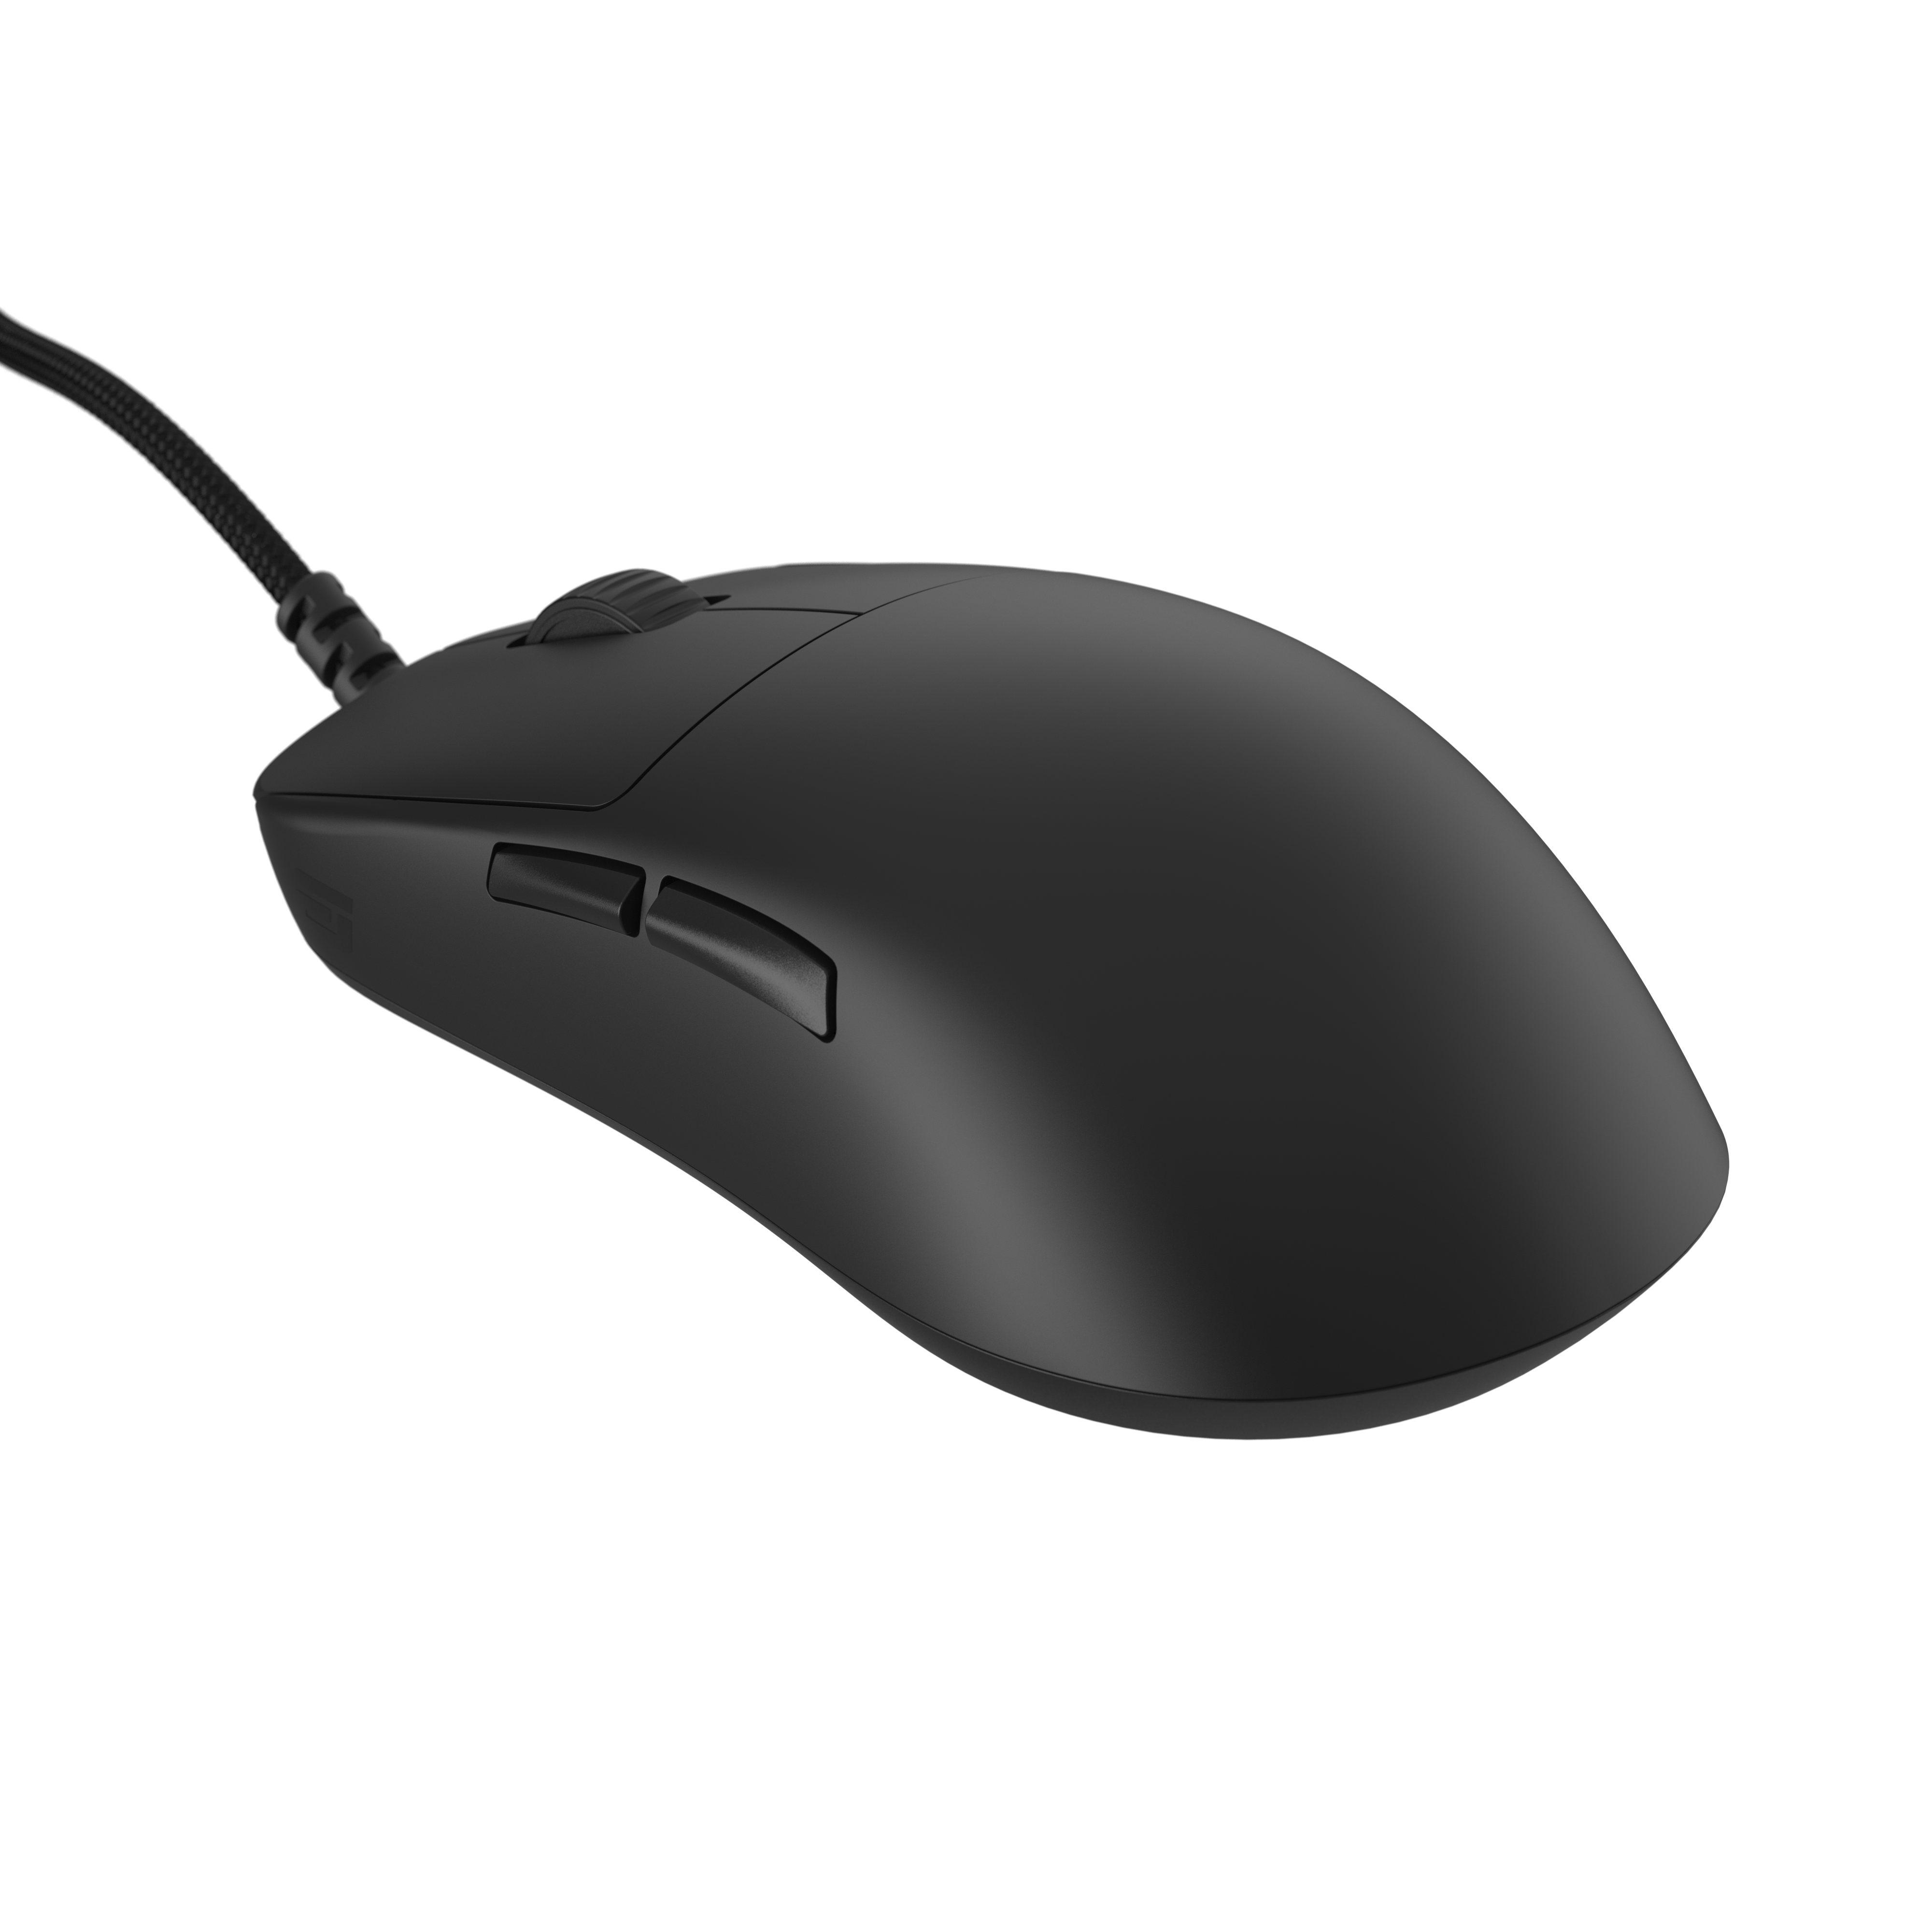 Endgame Gear OP1 8k USB Optical Gaming Mouse - Black